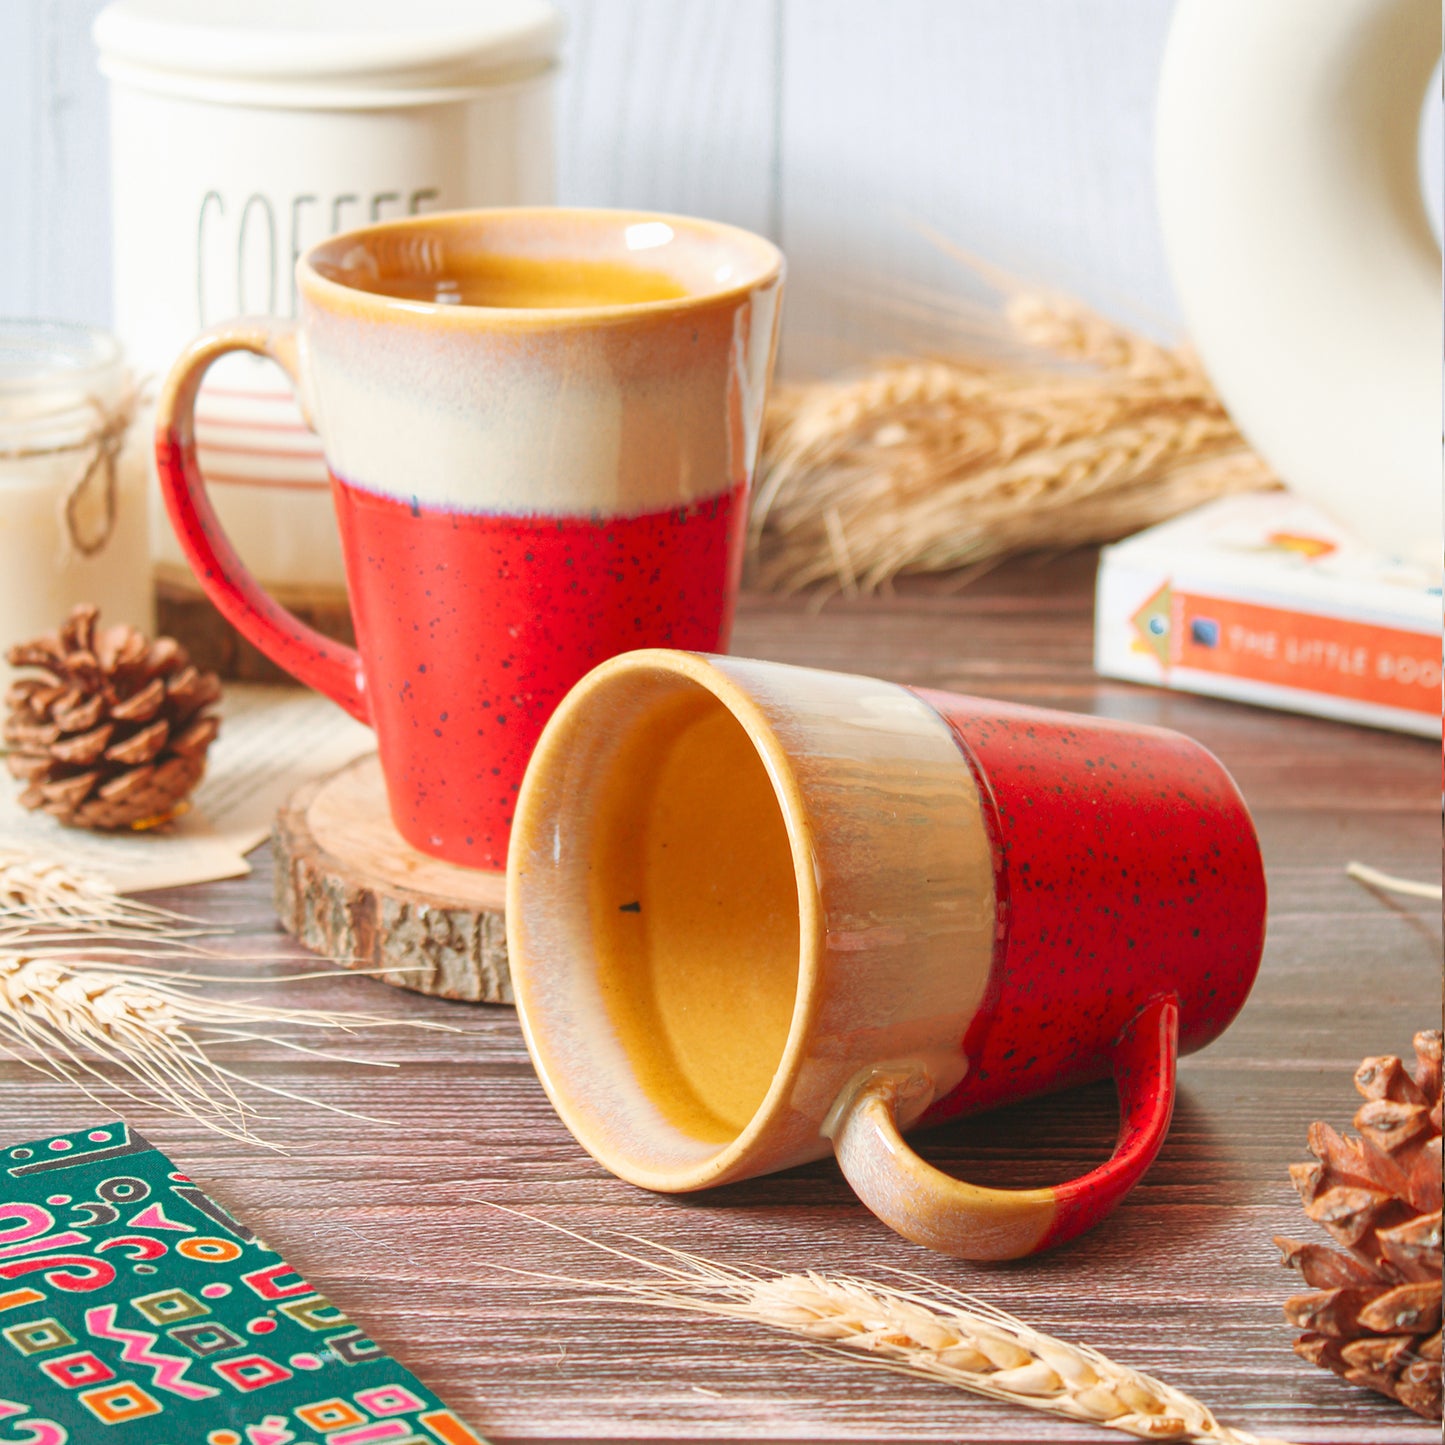 Red Waves Ceramic Coffee Mug (Set of Two)